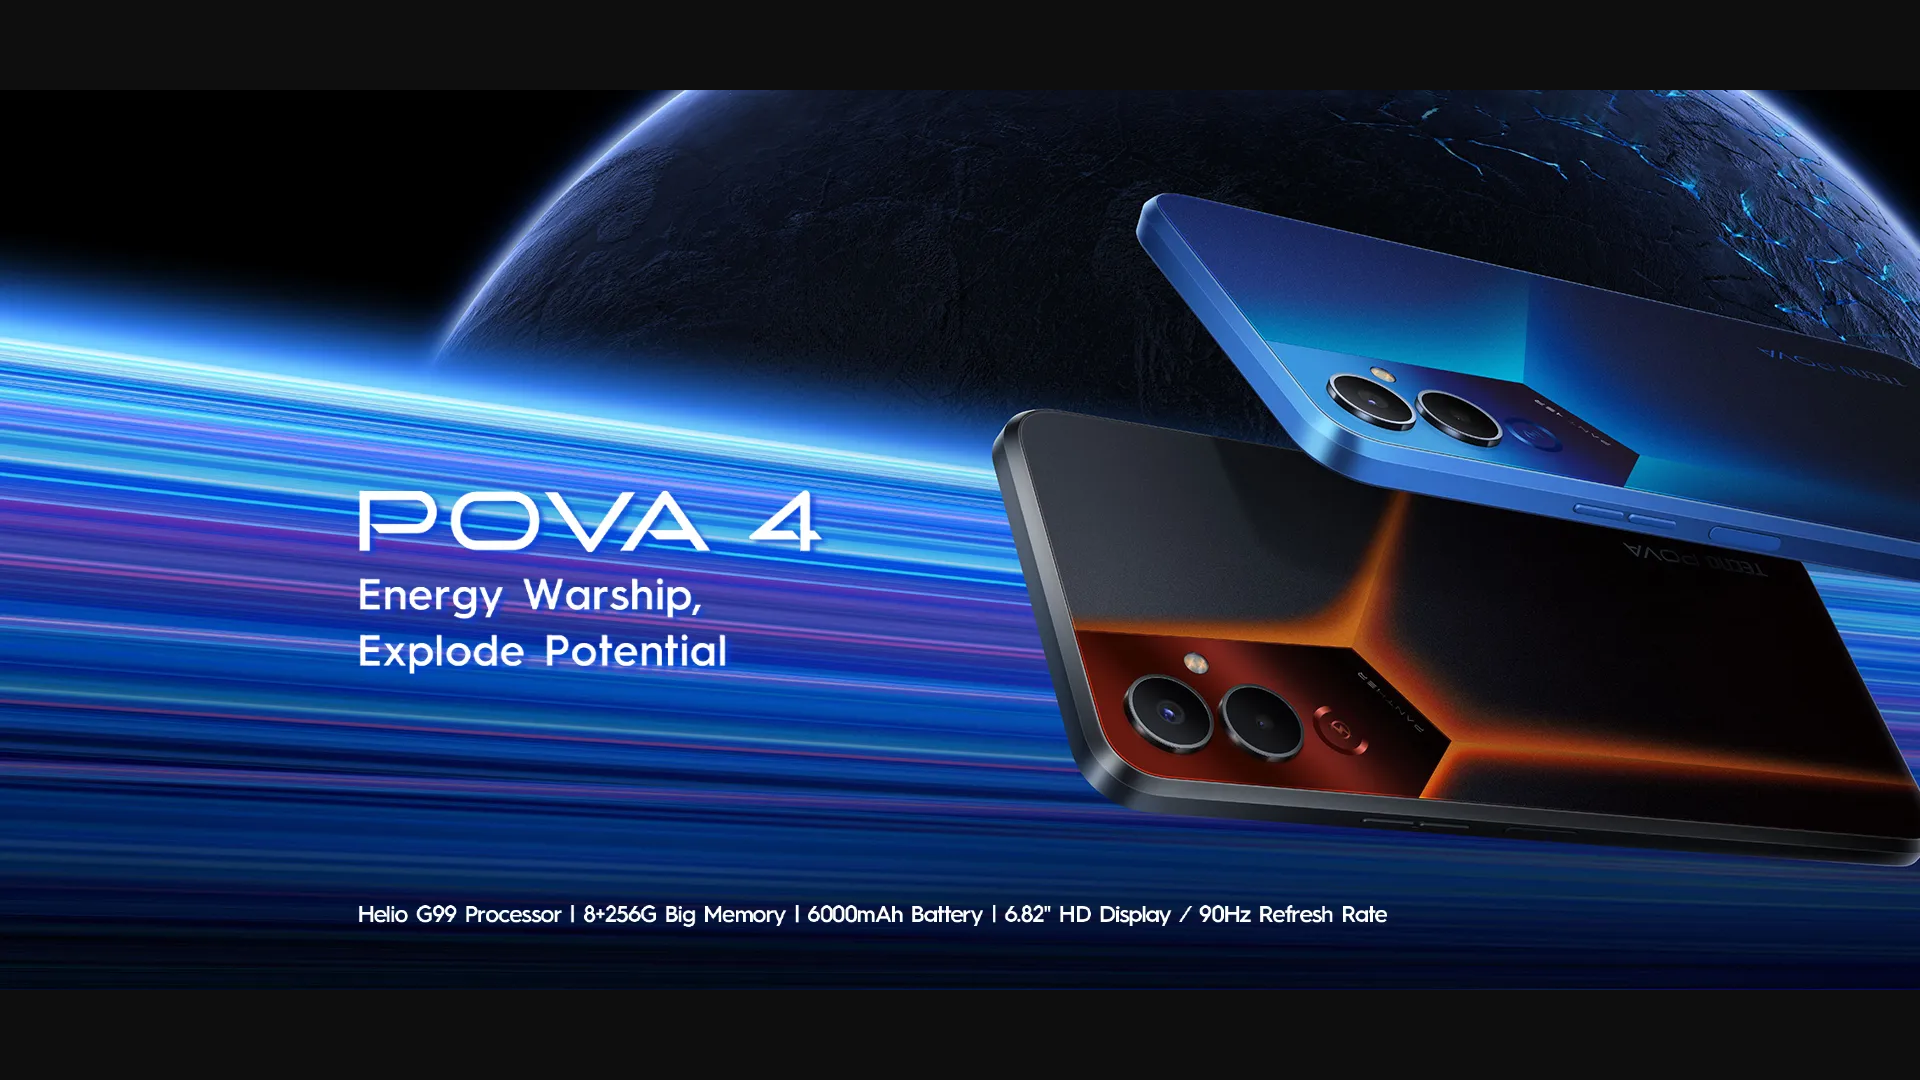 Hp Tecno Pova 4! Smartphone Spesifikasi Apik, RAM Besar dan Desain Memukau yang Harganya Cuma 1 Jutaan saja